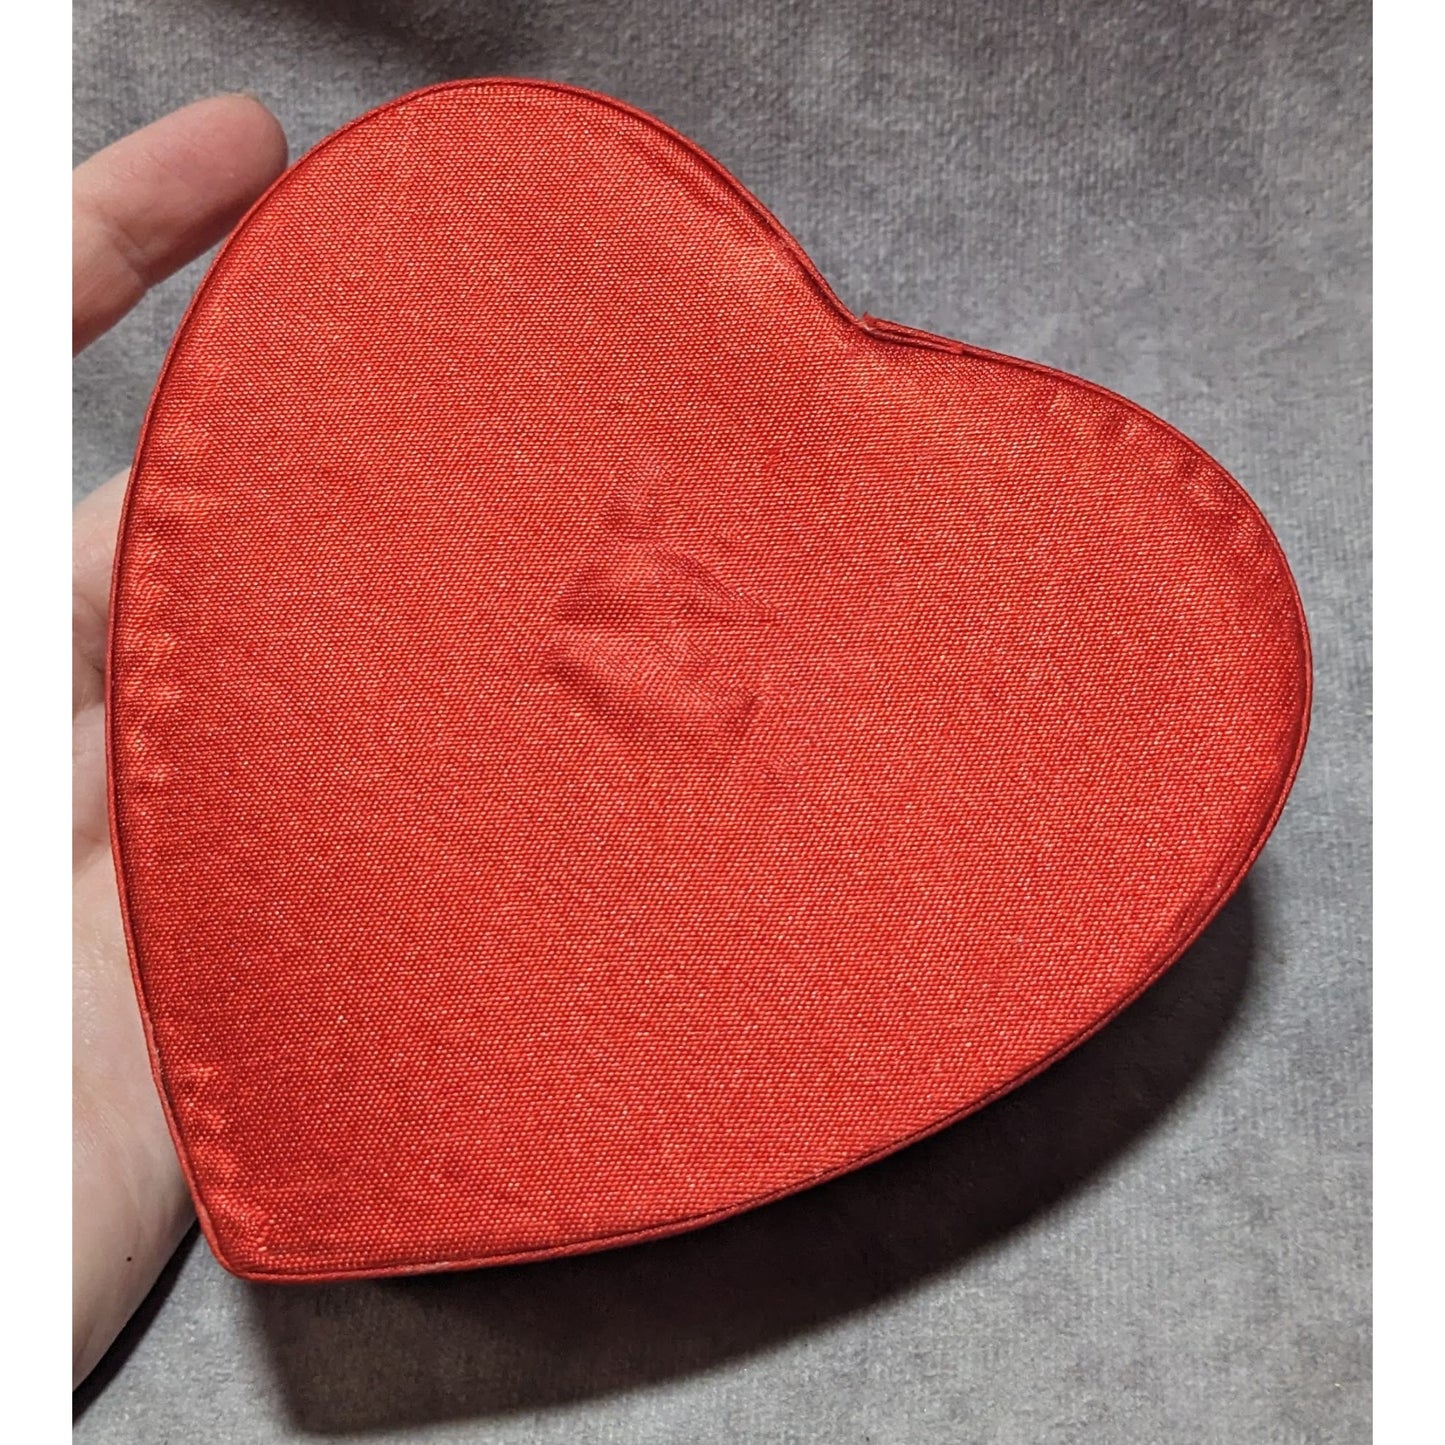 Embroidered Valentine Heart Gift Box